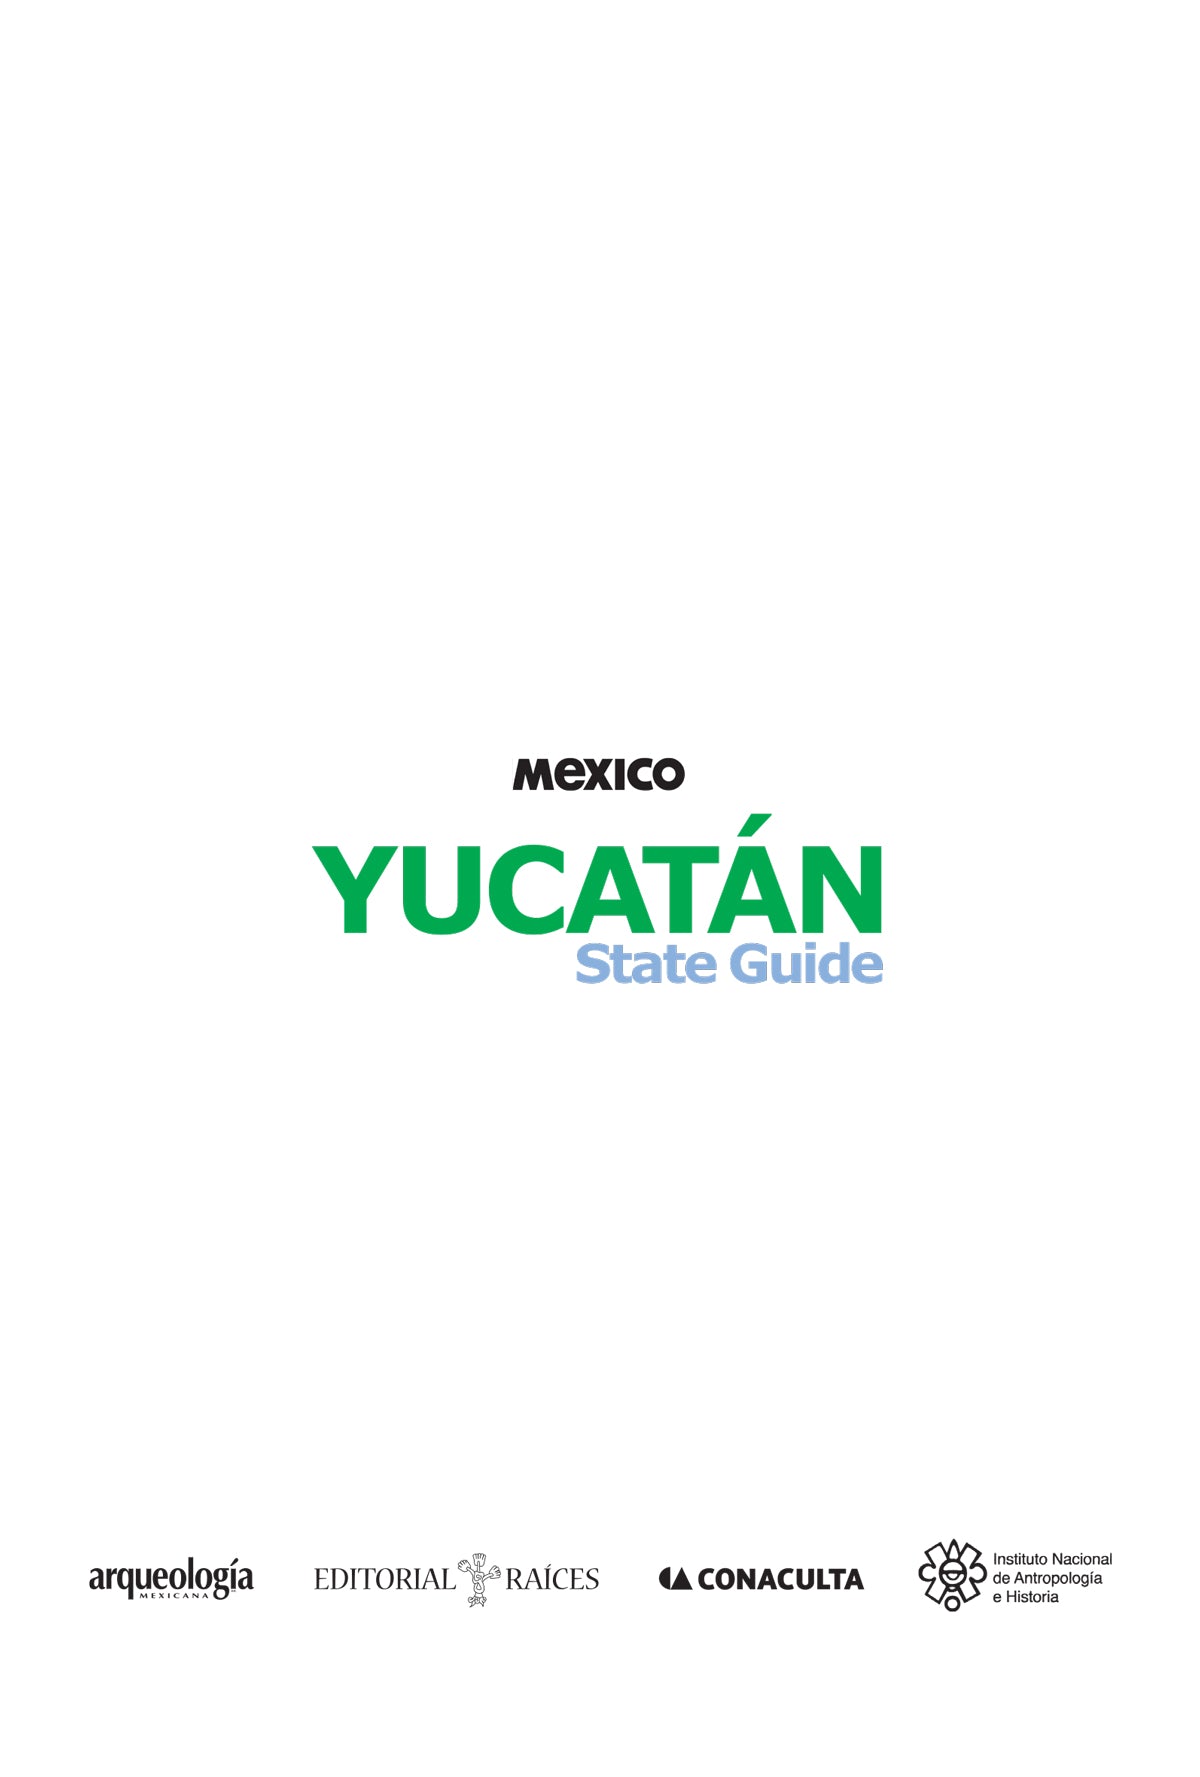 Yucatán - State Guide - English version